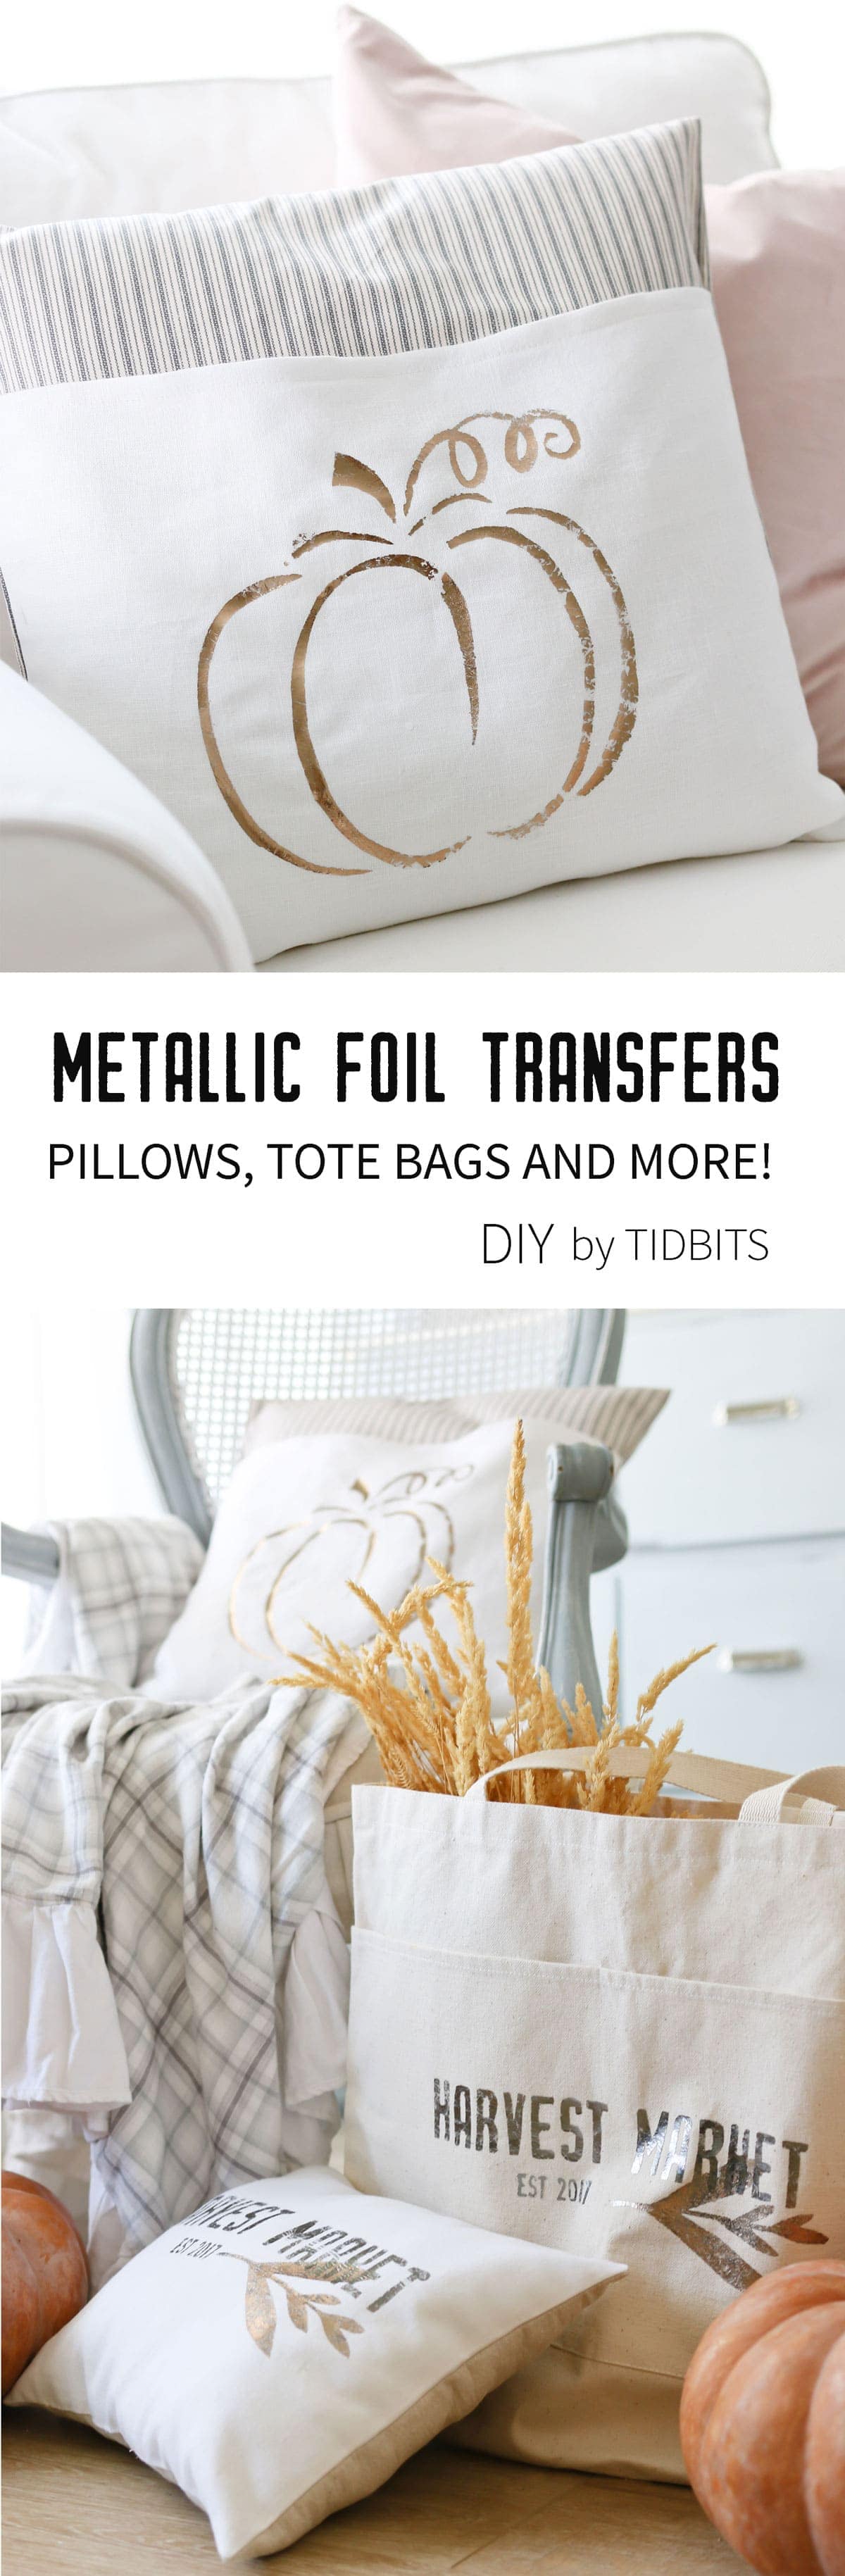 DIY Metallic Fall Pillows - No expensive cutting machine needed!